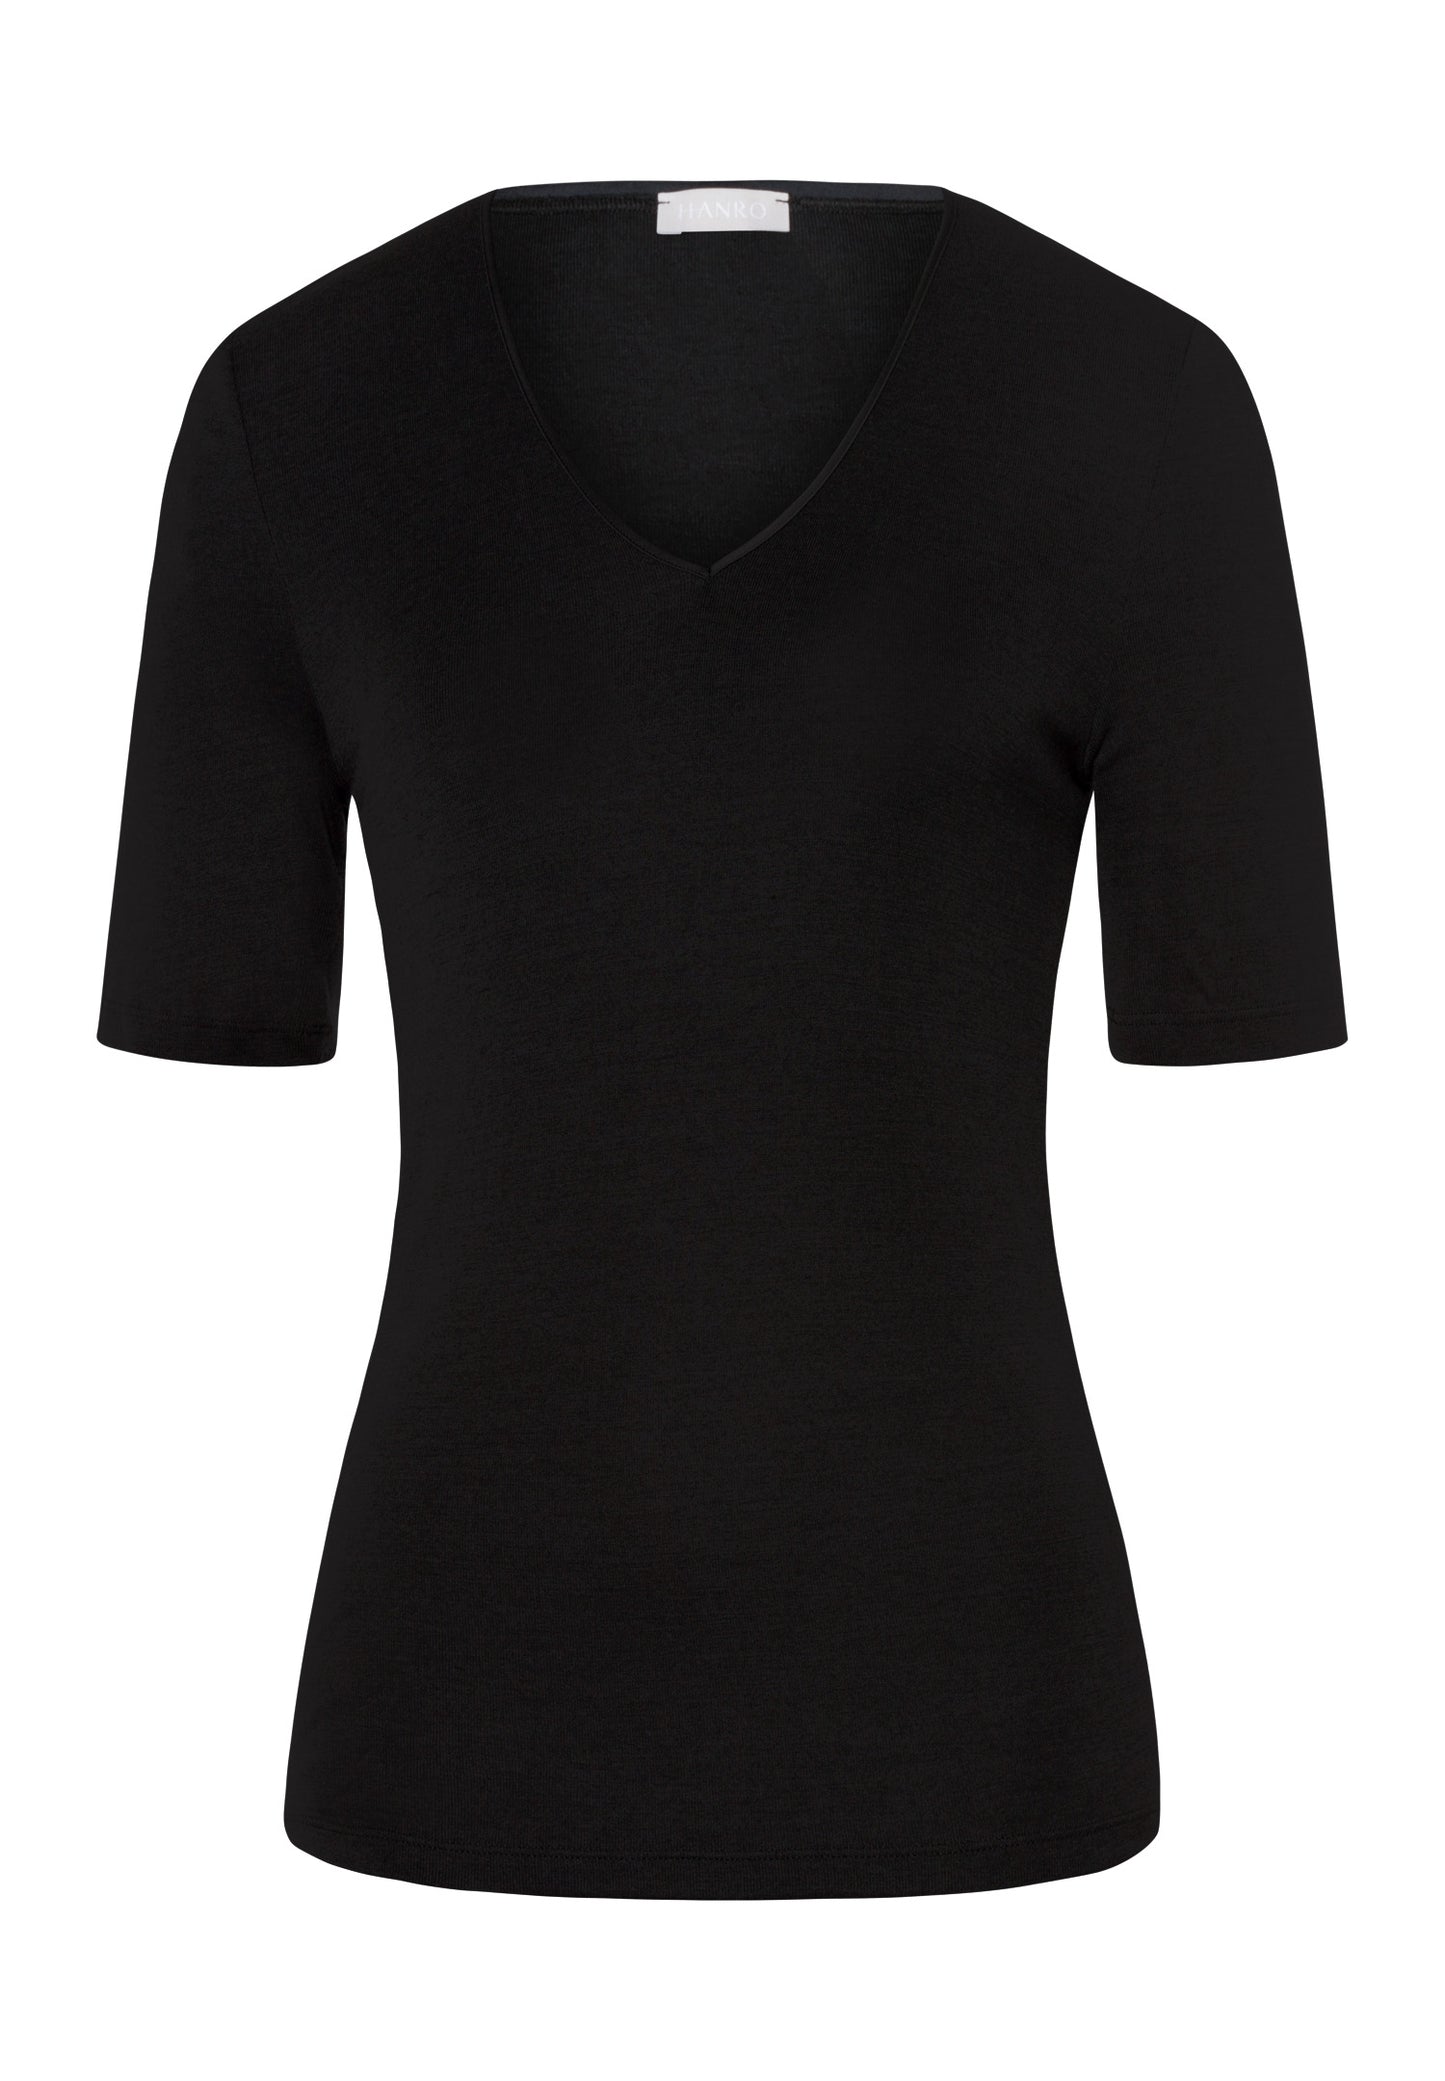 HANRO Black Woolen Silk Short Sleeve Shirt